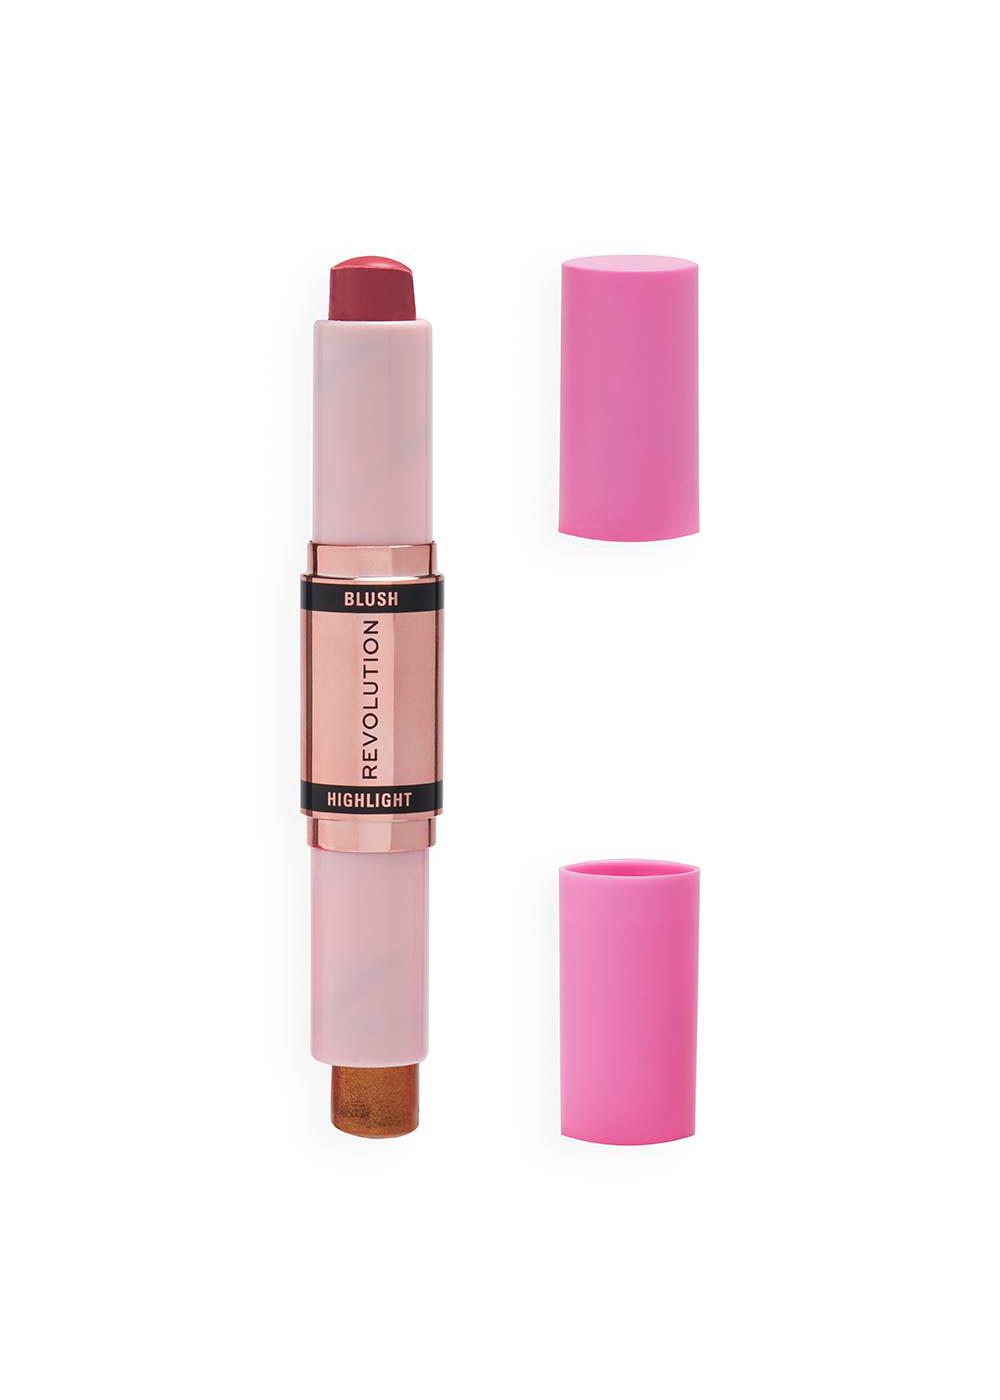 Makeup Revolution Double Ended Blush & Highlight Stick - Flushing Pink; image 2 of 4